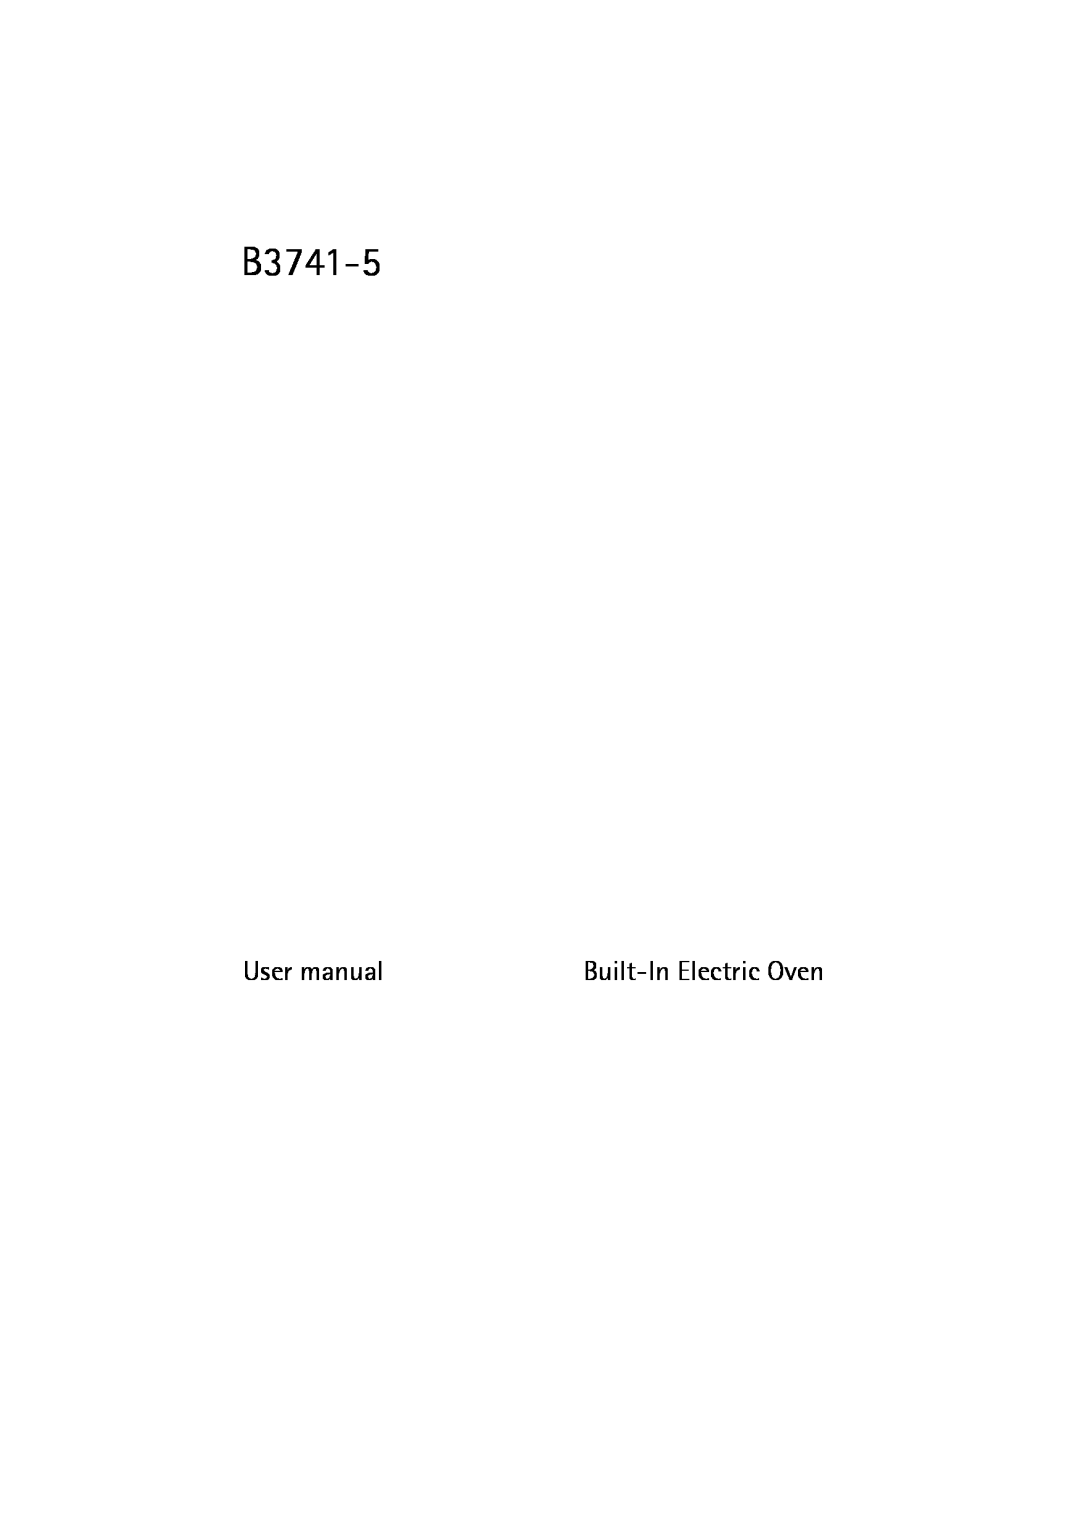 Electrolux B3741-5 user manual User manual 